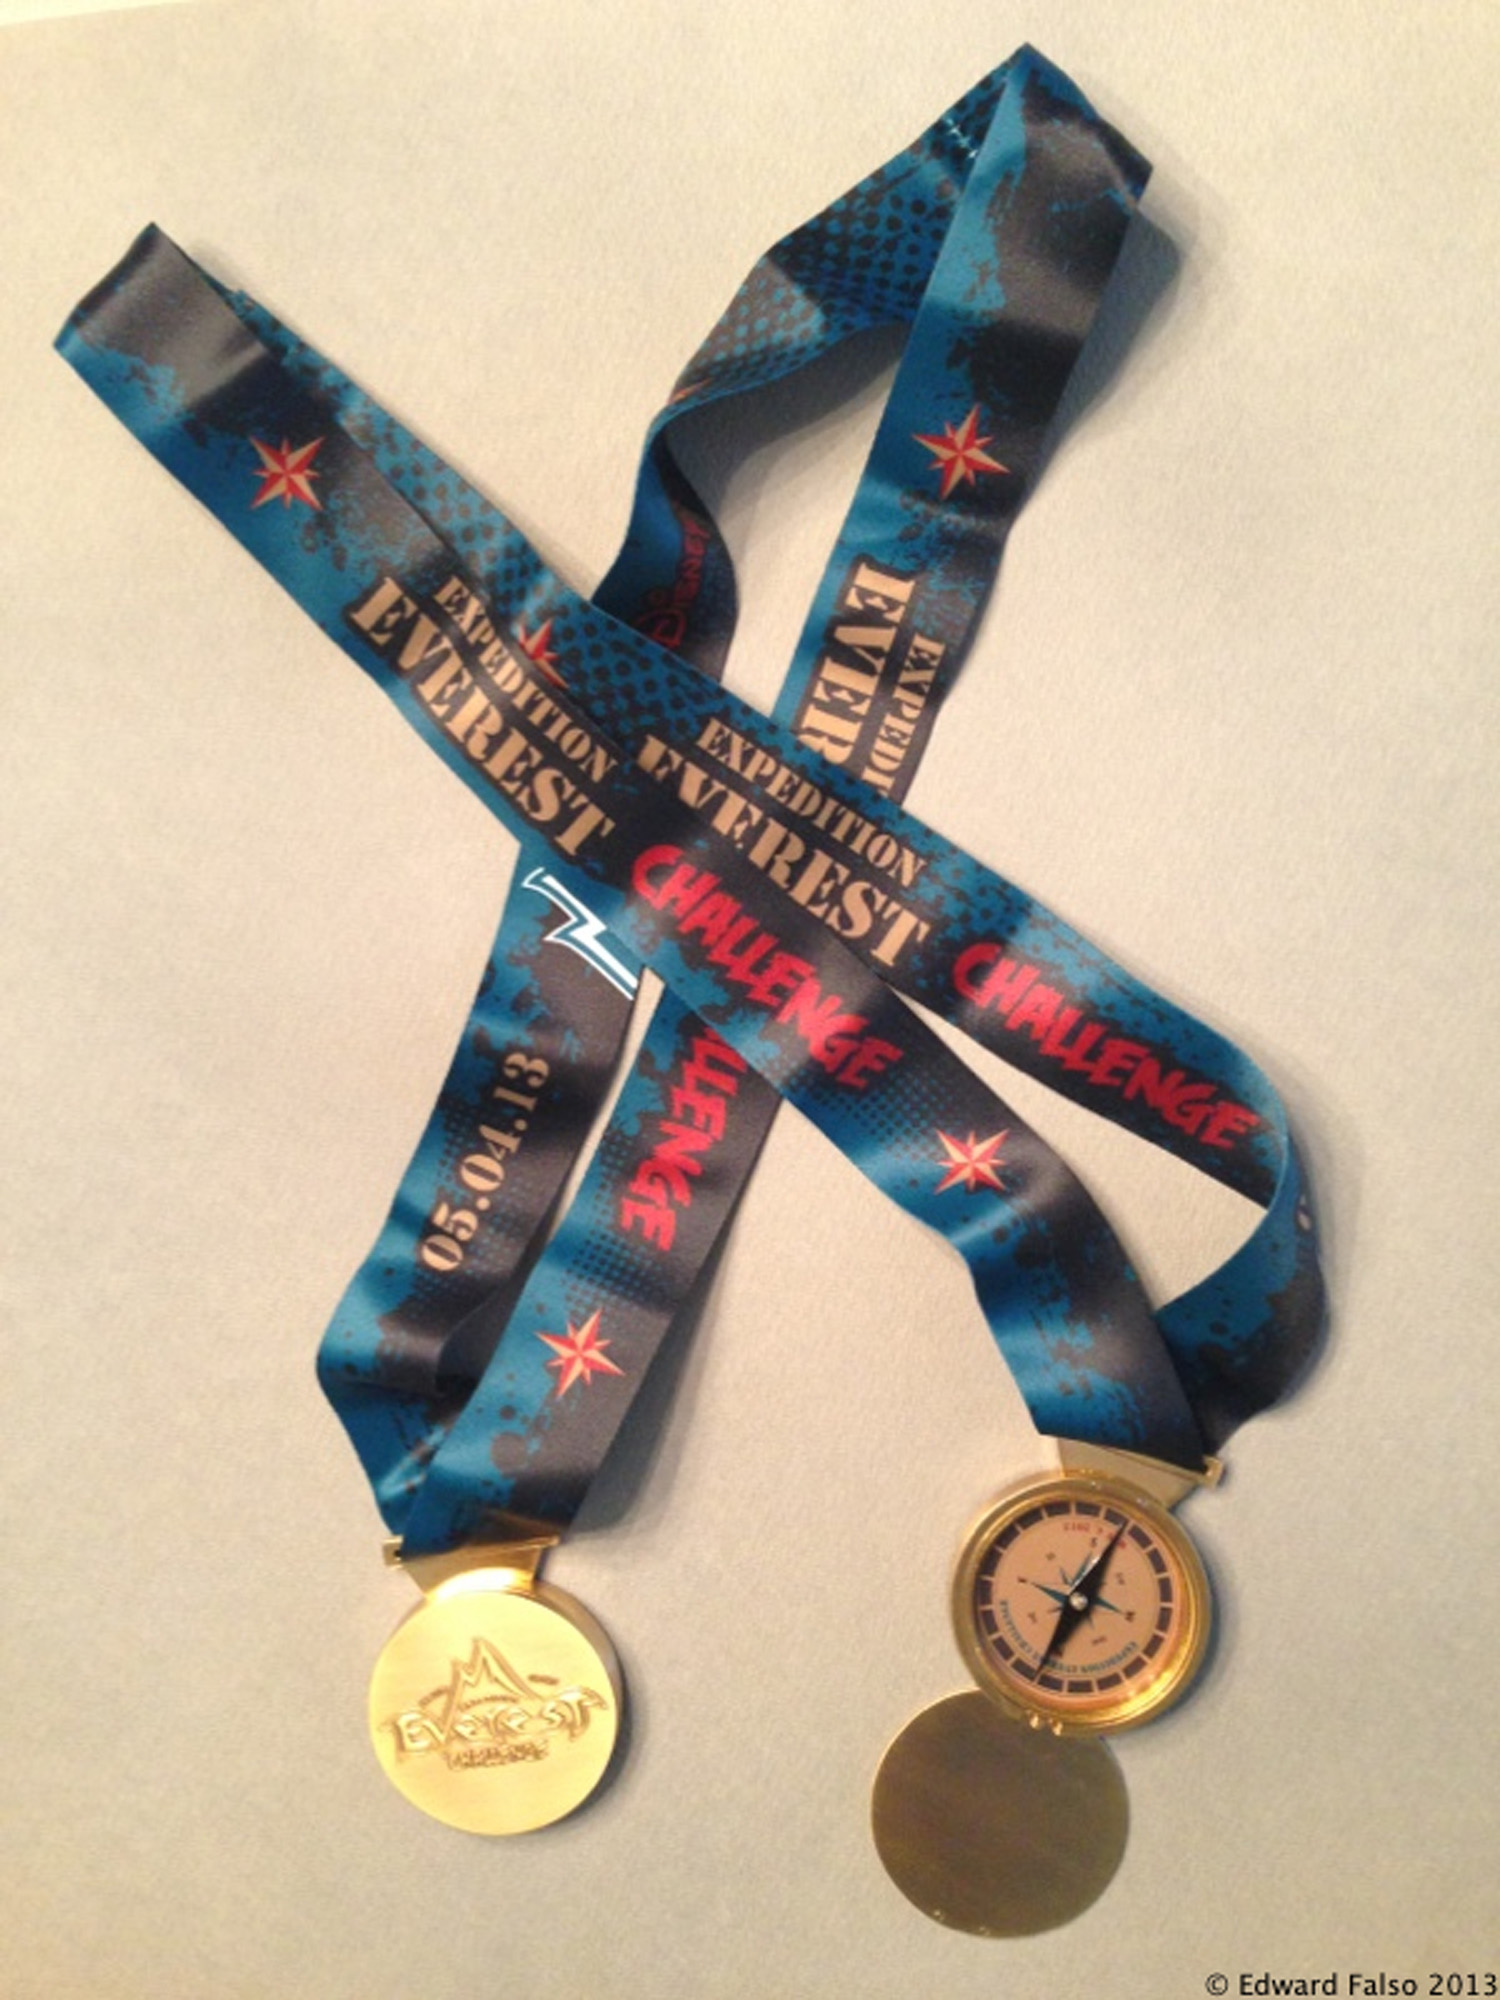 Expedition Everest 2013-Finisher Medal